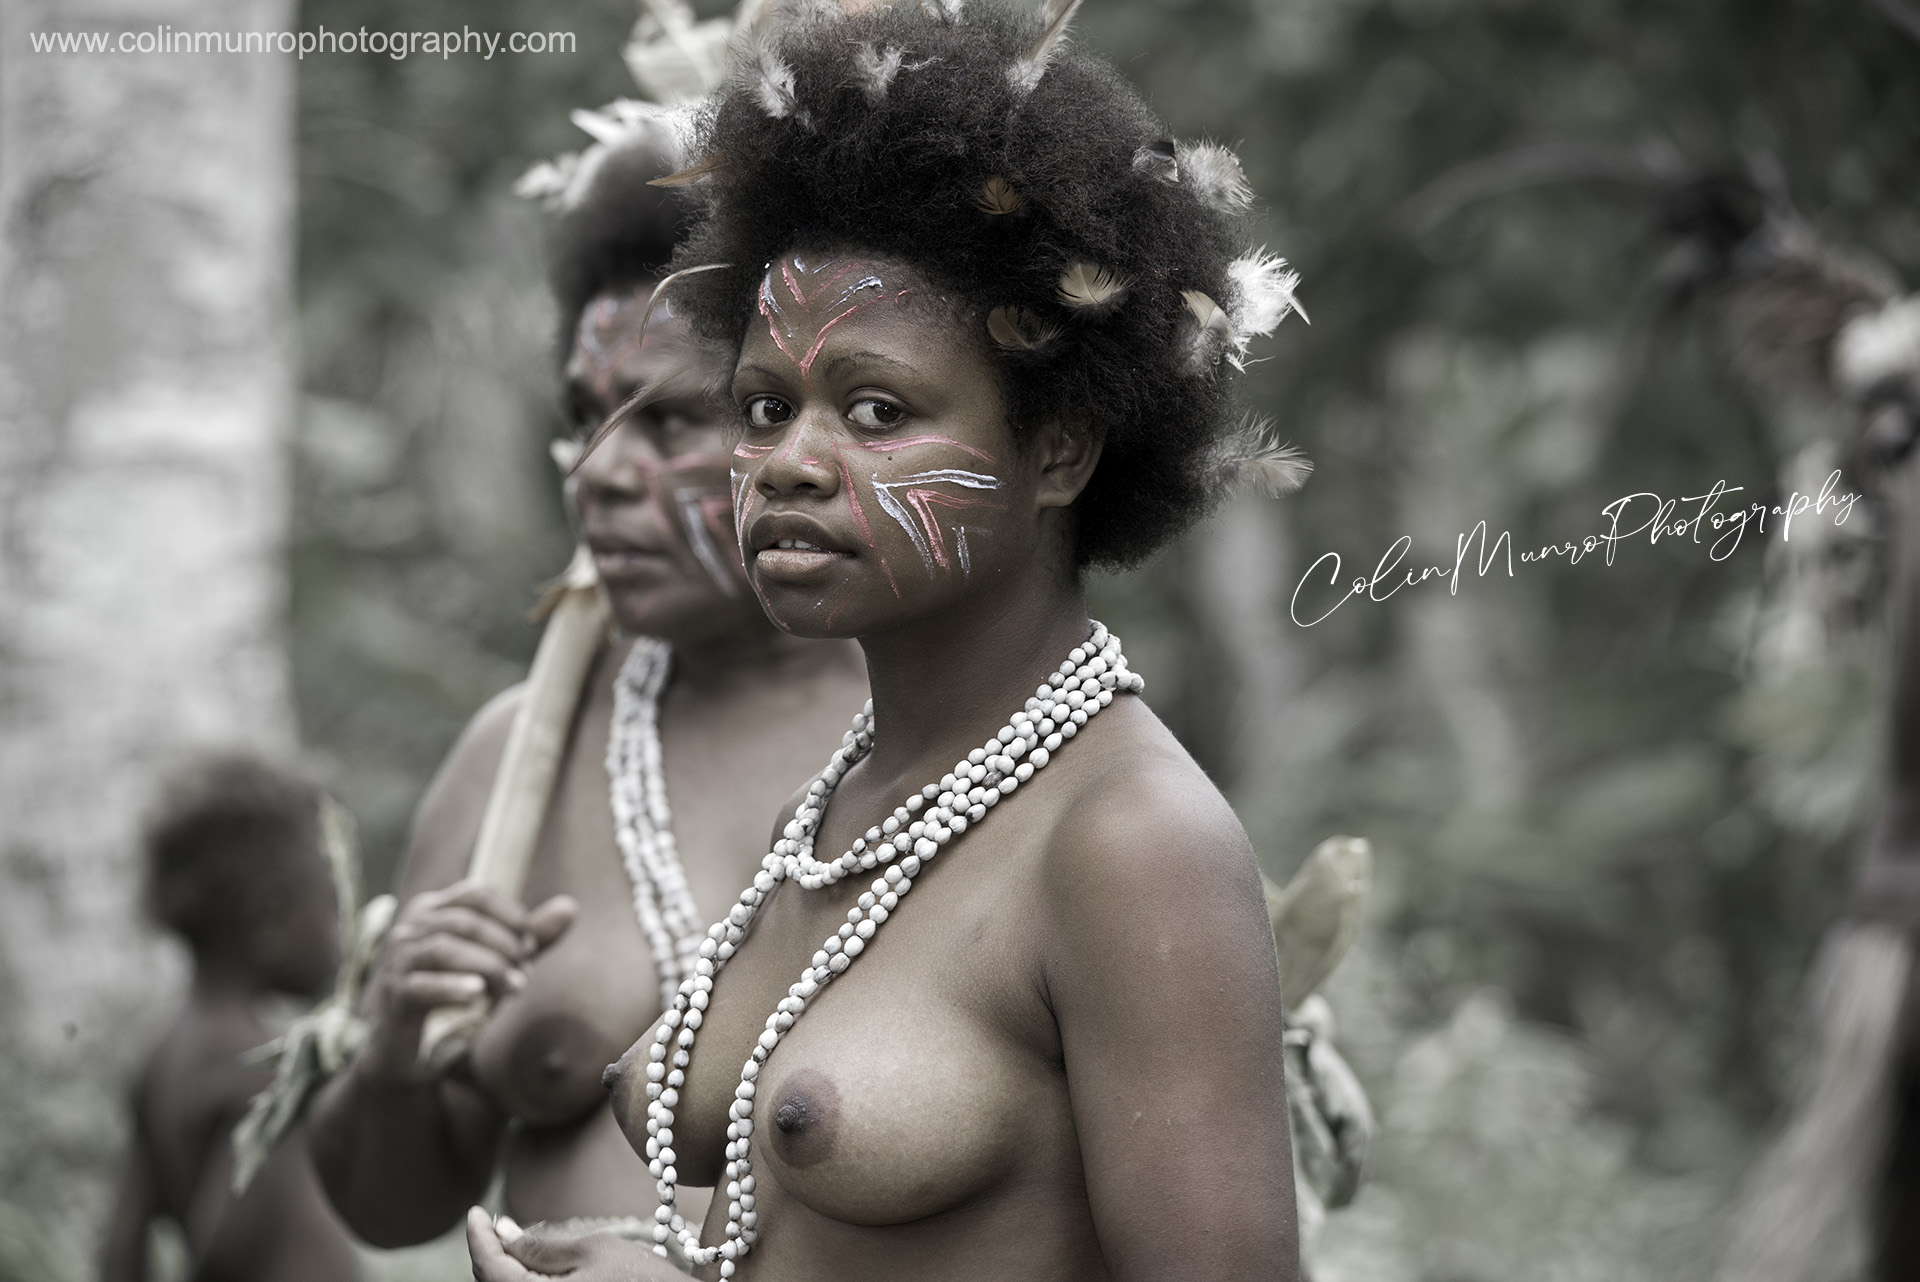 Dancers, malekula, Vanuatu. ©Colin Munro Photography